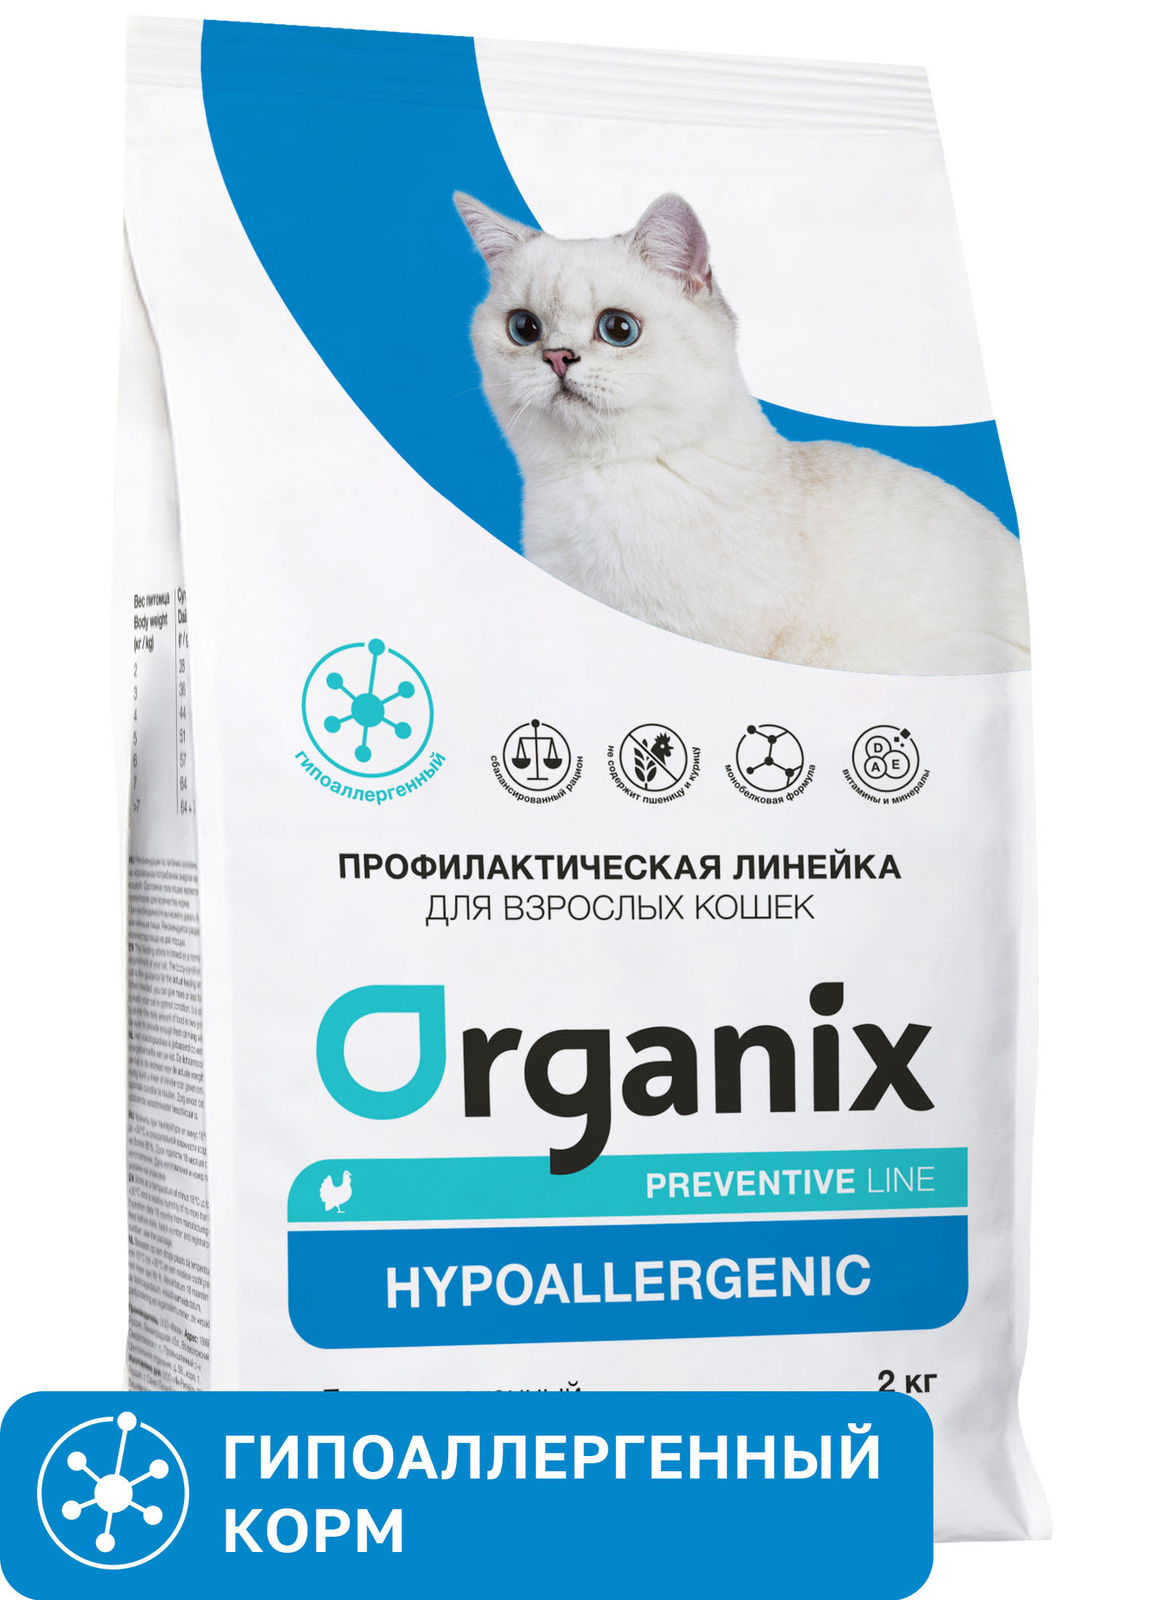 Organix Preventive Line Organix Preventive Line hypoallergenic сухой корм для кошек Гипоаллергенный (600 г)